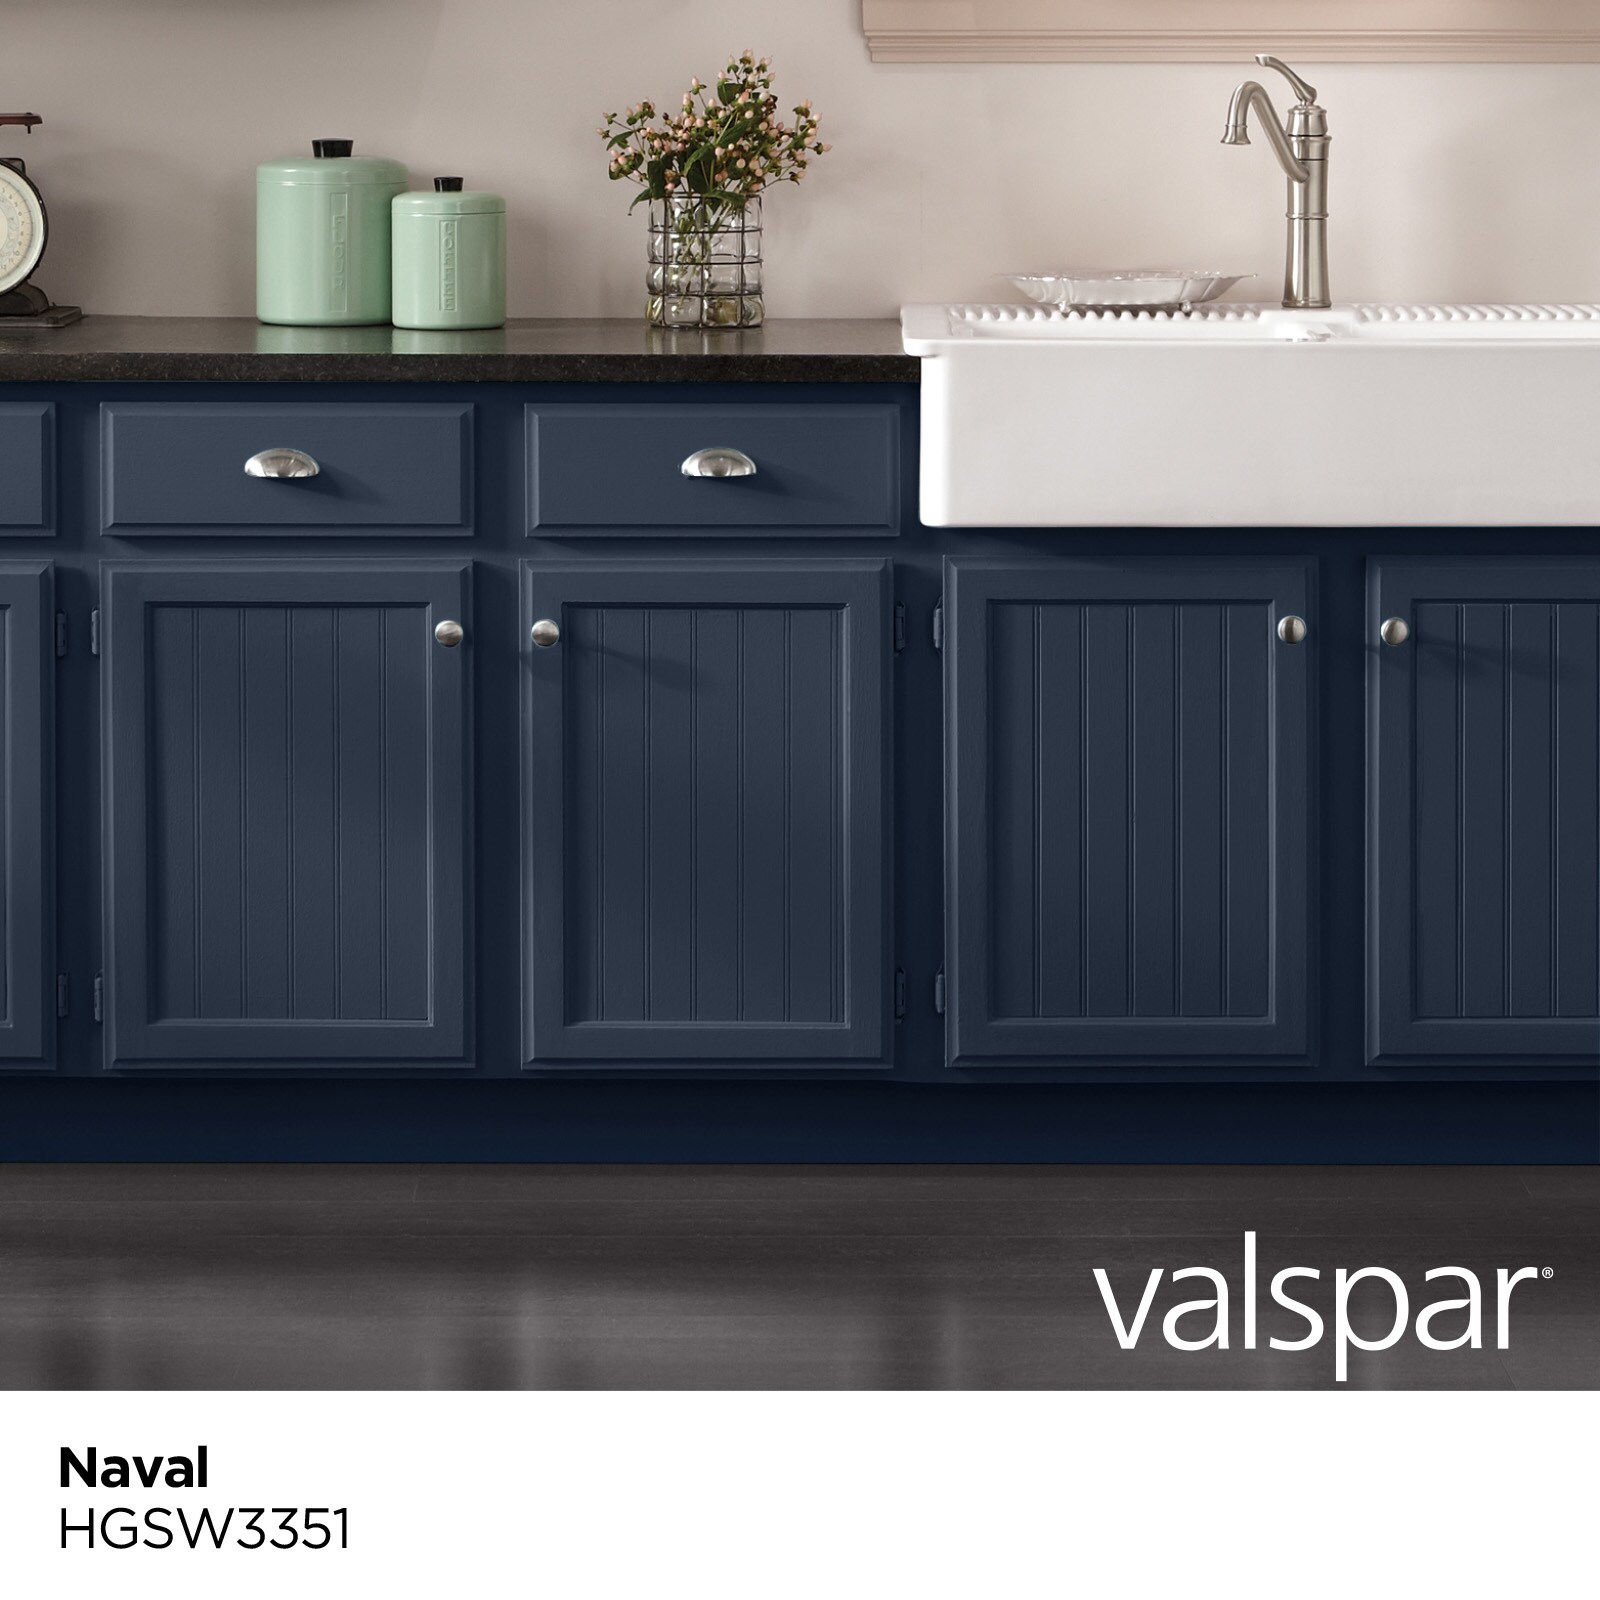 Valspar Cabinet And Furniture Semi Gloss Naval Hgsw3351 Enamel Interior